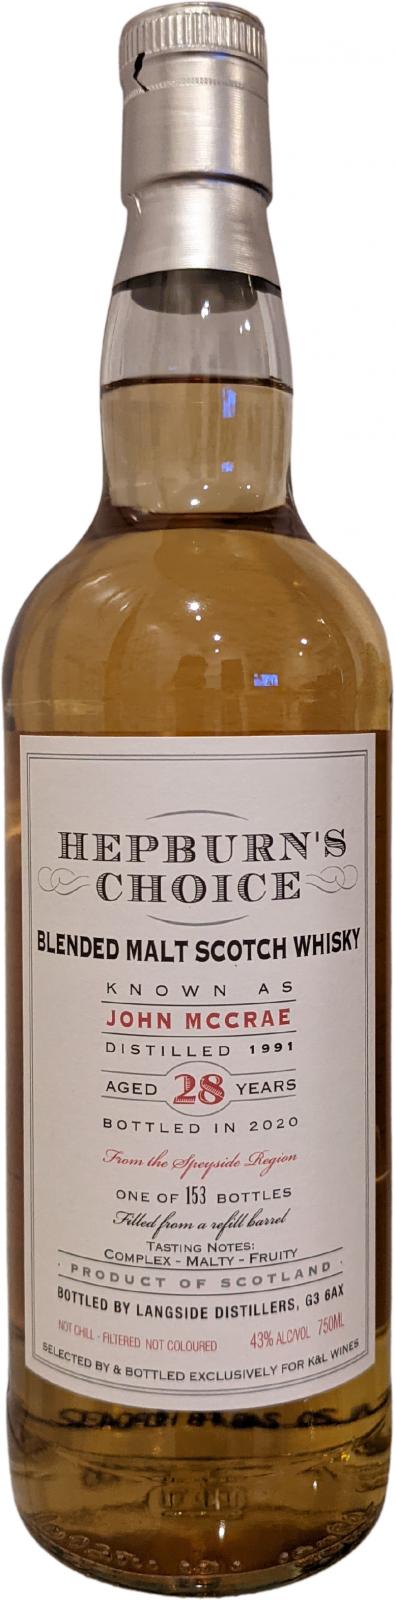 John McCrae 1991 LsD Hepburn's Choice Refill Hogshead K&L Wine Merchants Exclusive 43% 750ml